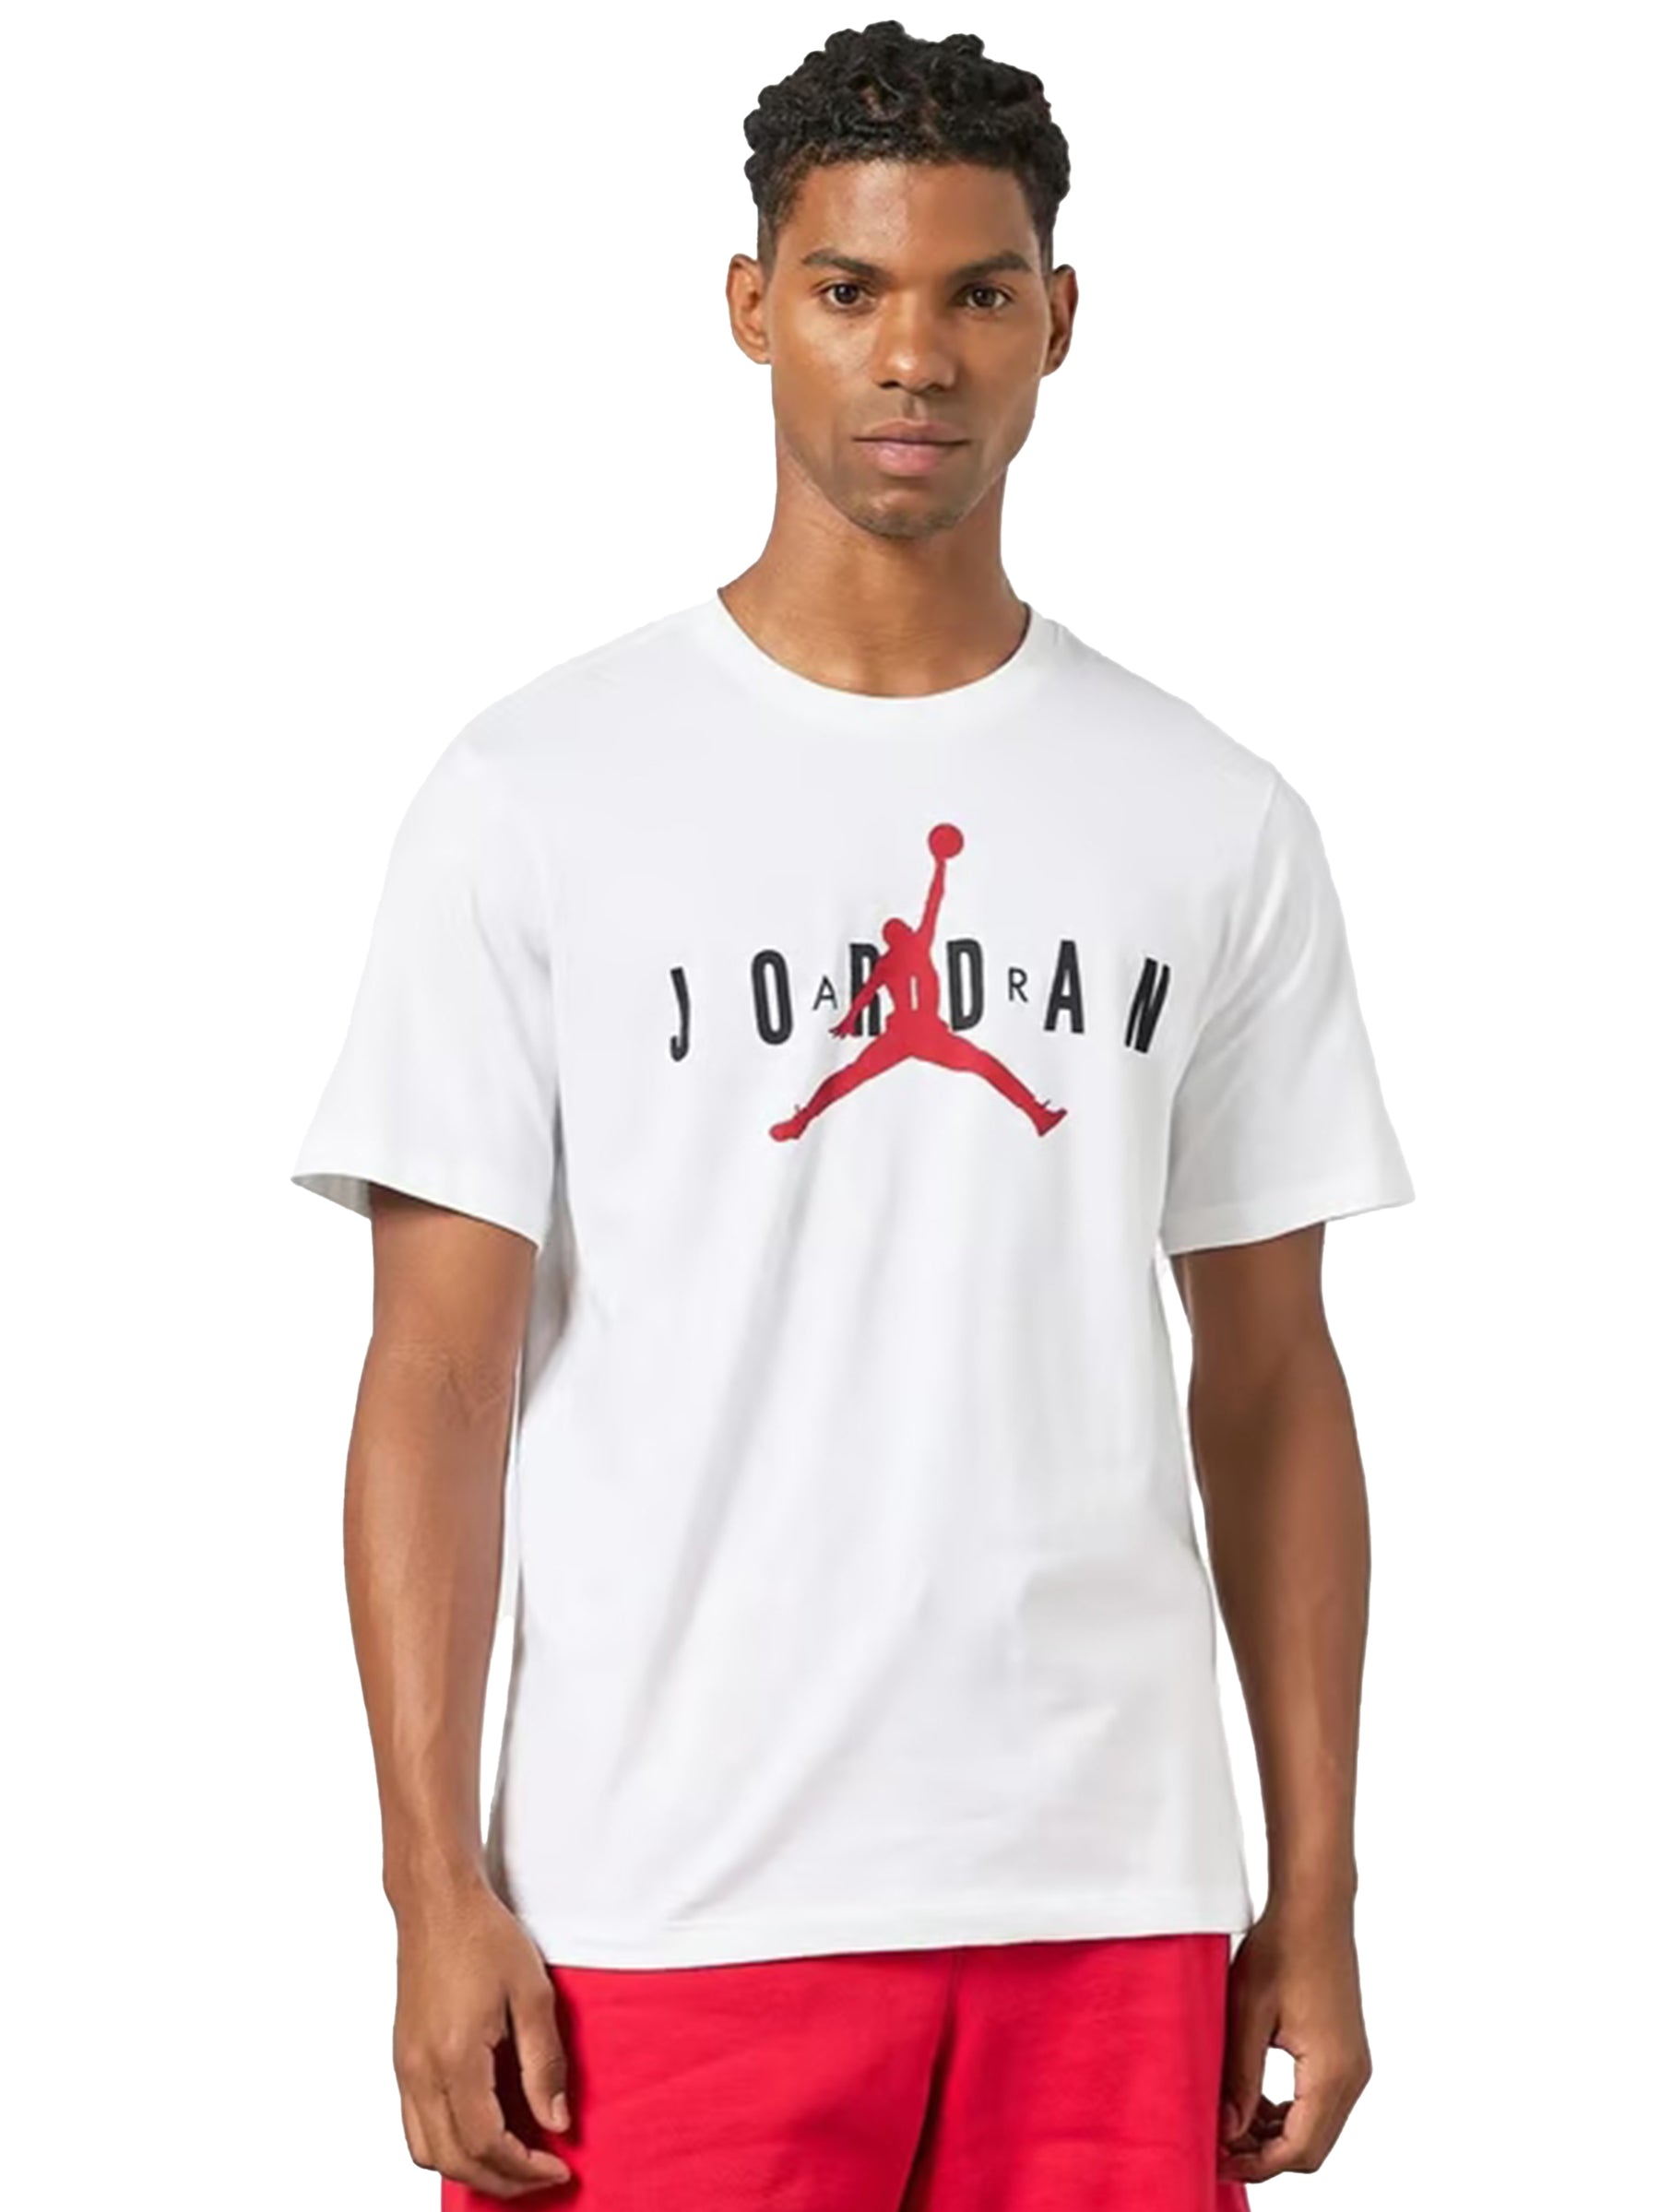 NIKE_TST_CX4212 Nike Air Jordon Mens T Shirt RAWDENIM RAWDENIM